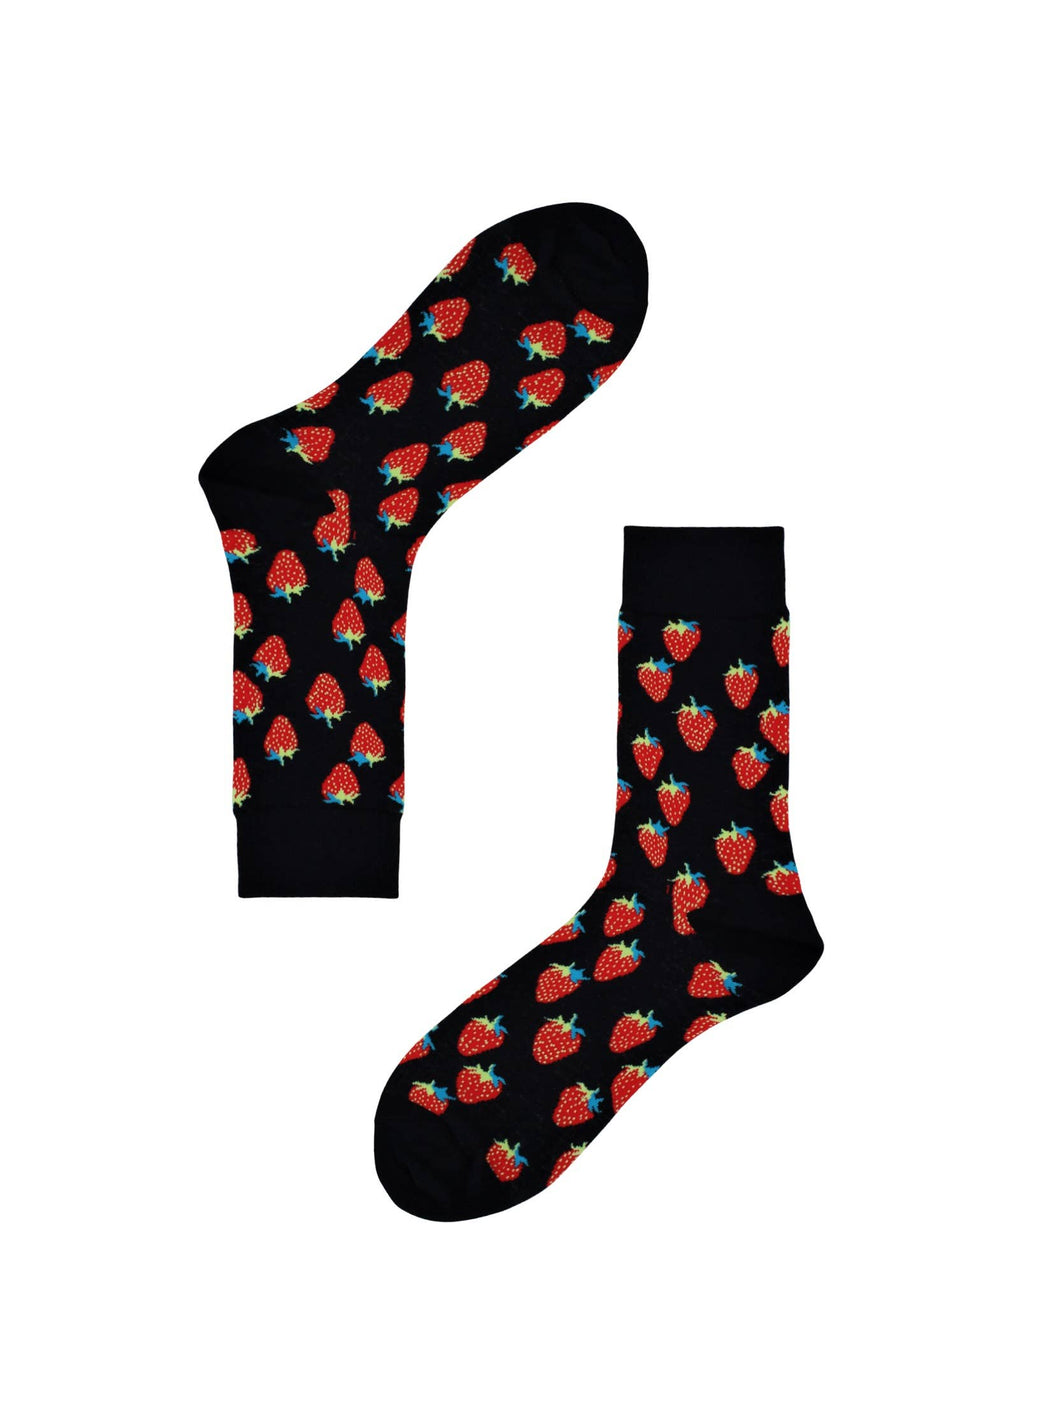 Sick socks - Strawberry - Fruits Food Dress Casual Socks